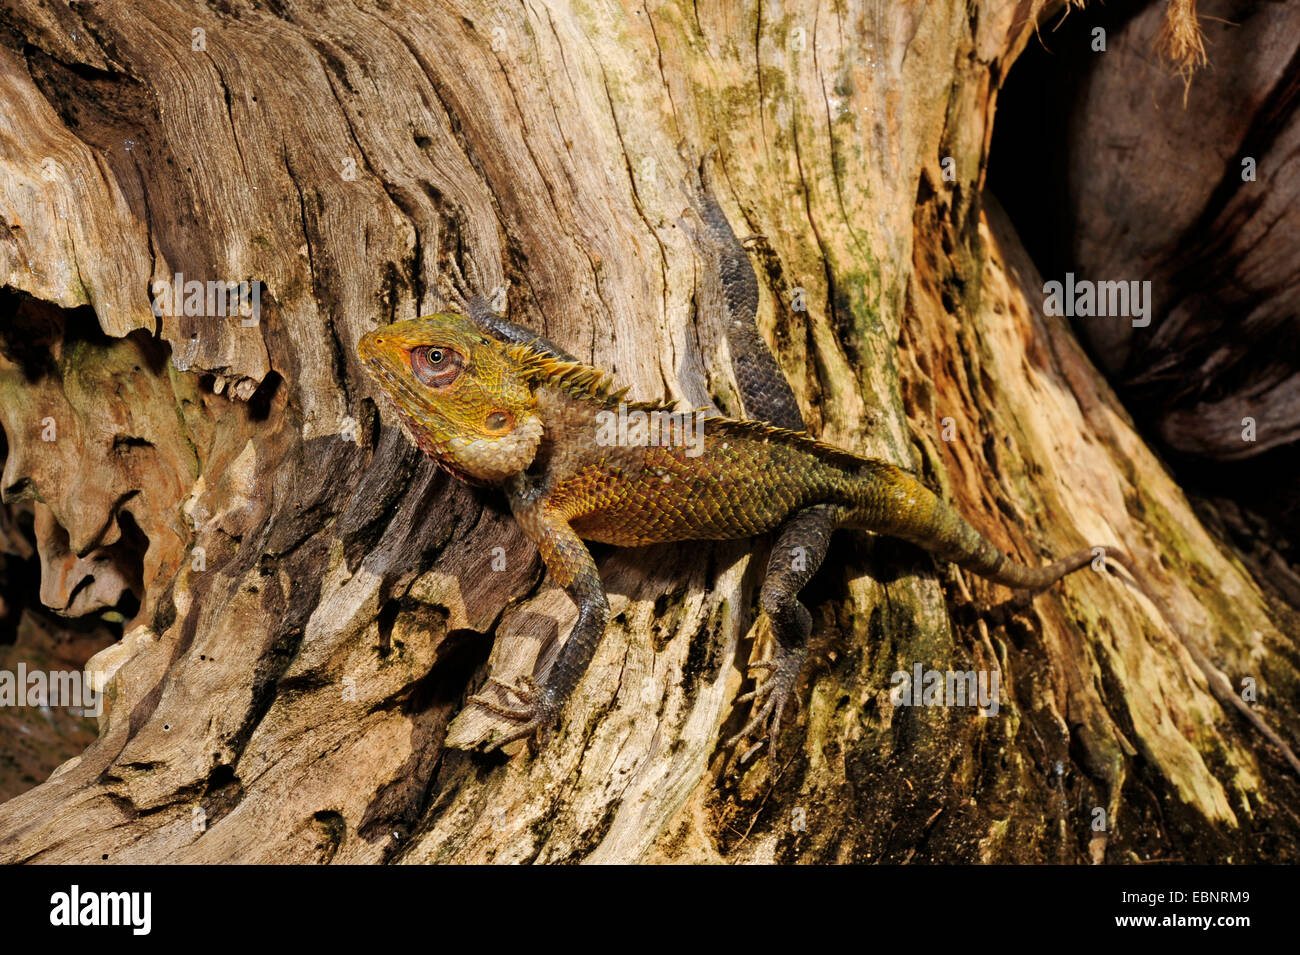 common bloodsucker, Indian variable lizard, variable agama, chameleon (Calotes versicolor), on a tree snag, Sri Lanka Stock Photo